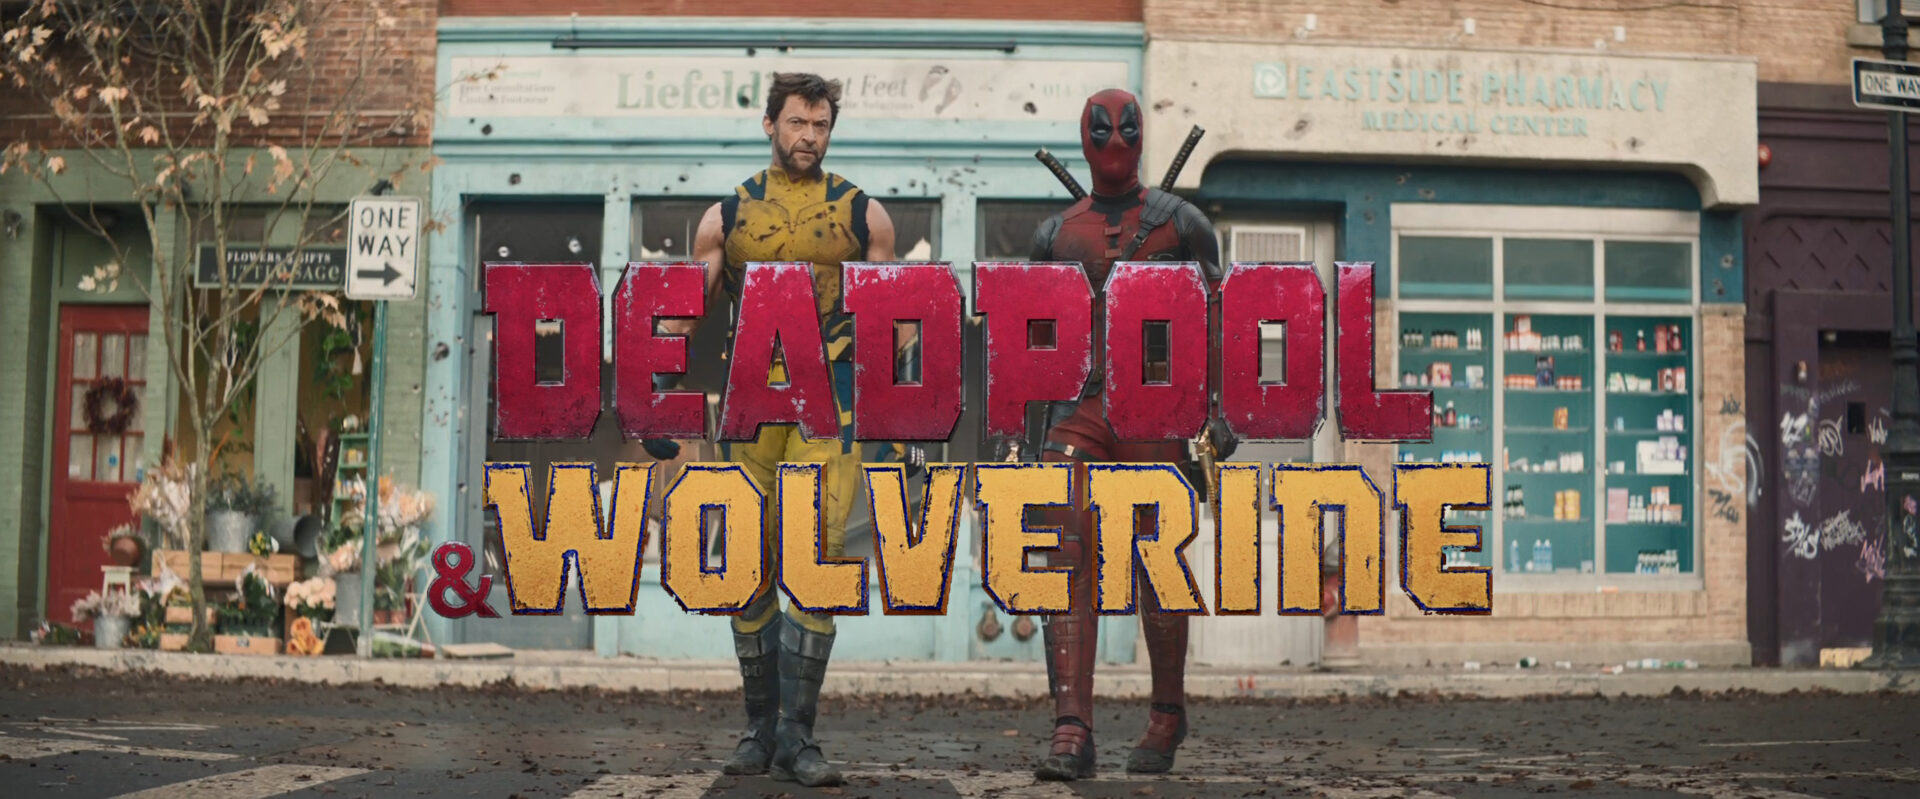 wolverine deadpool theatrical trailer banner